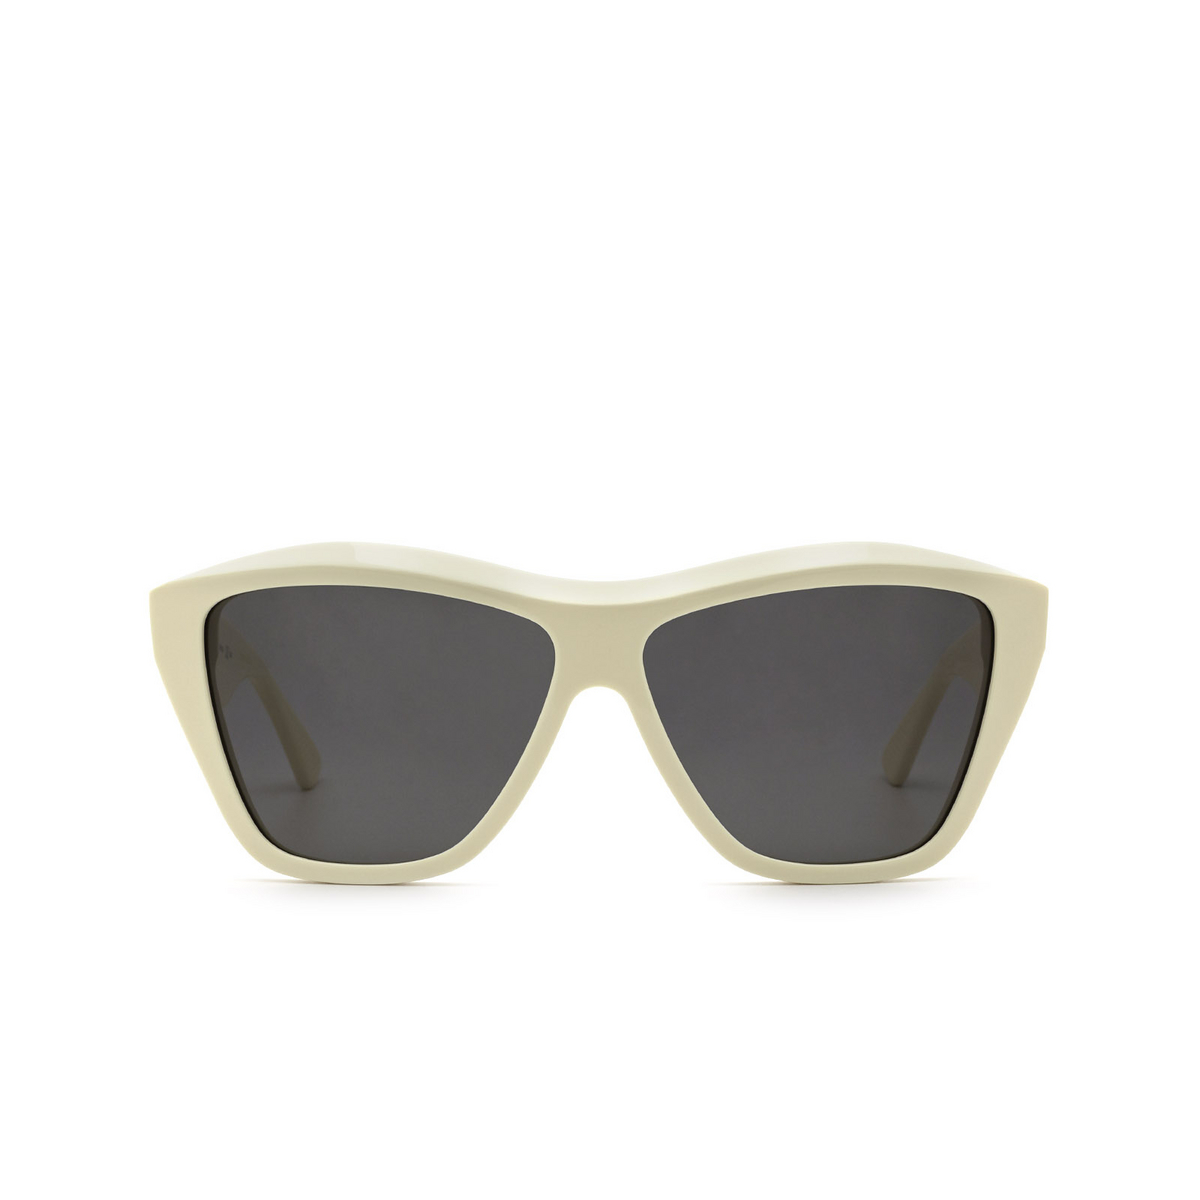 Bottega Veneta® Irregular Sunglasses: BV1092S color Ivory 003 - front view.